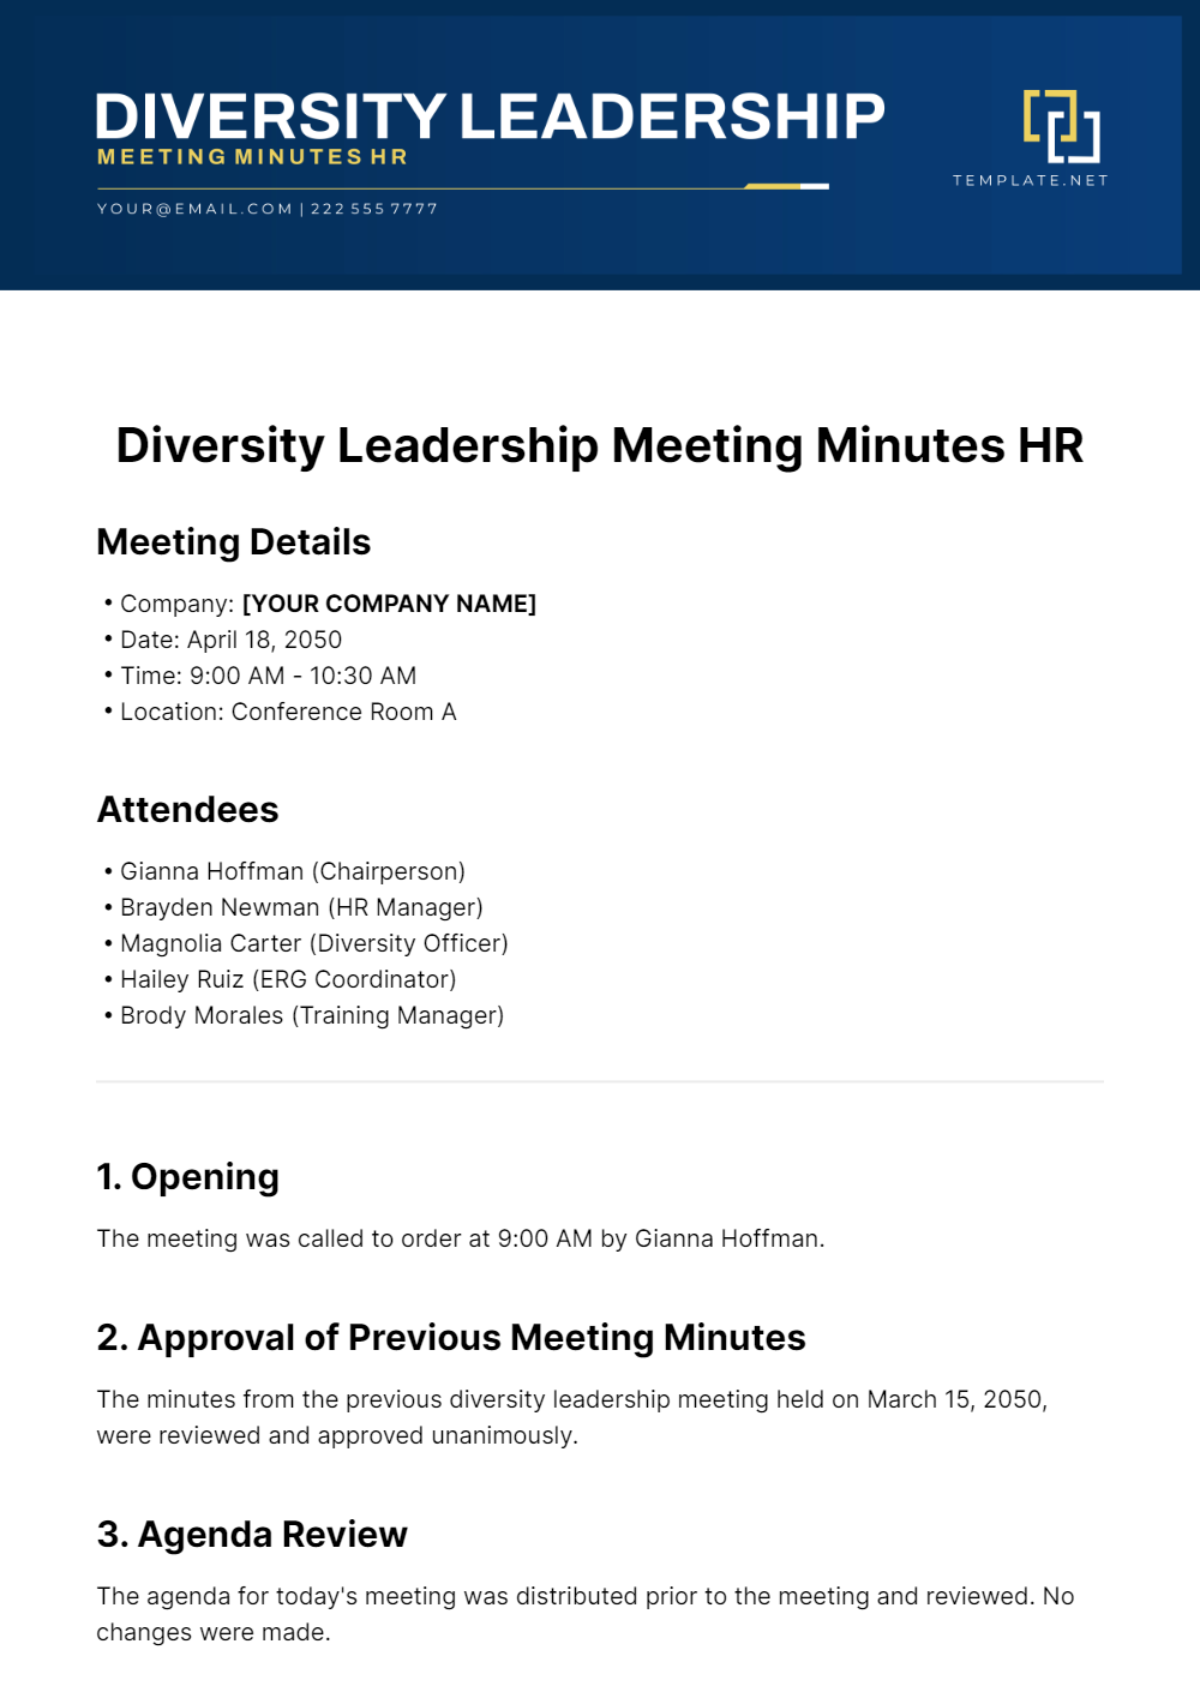 Diversity Leadership Meeting Minutes HR Template